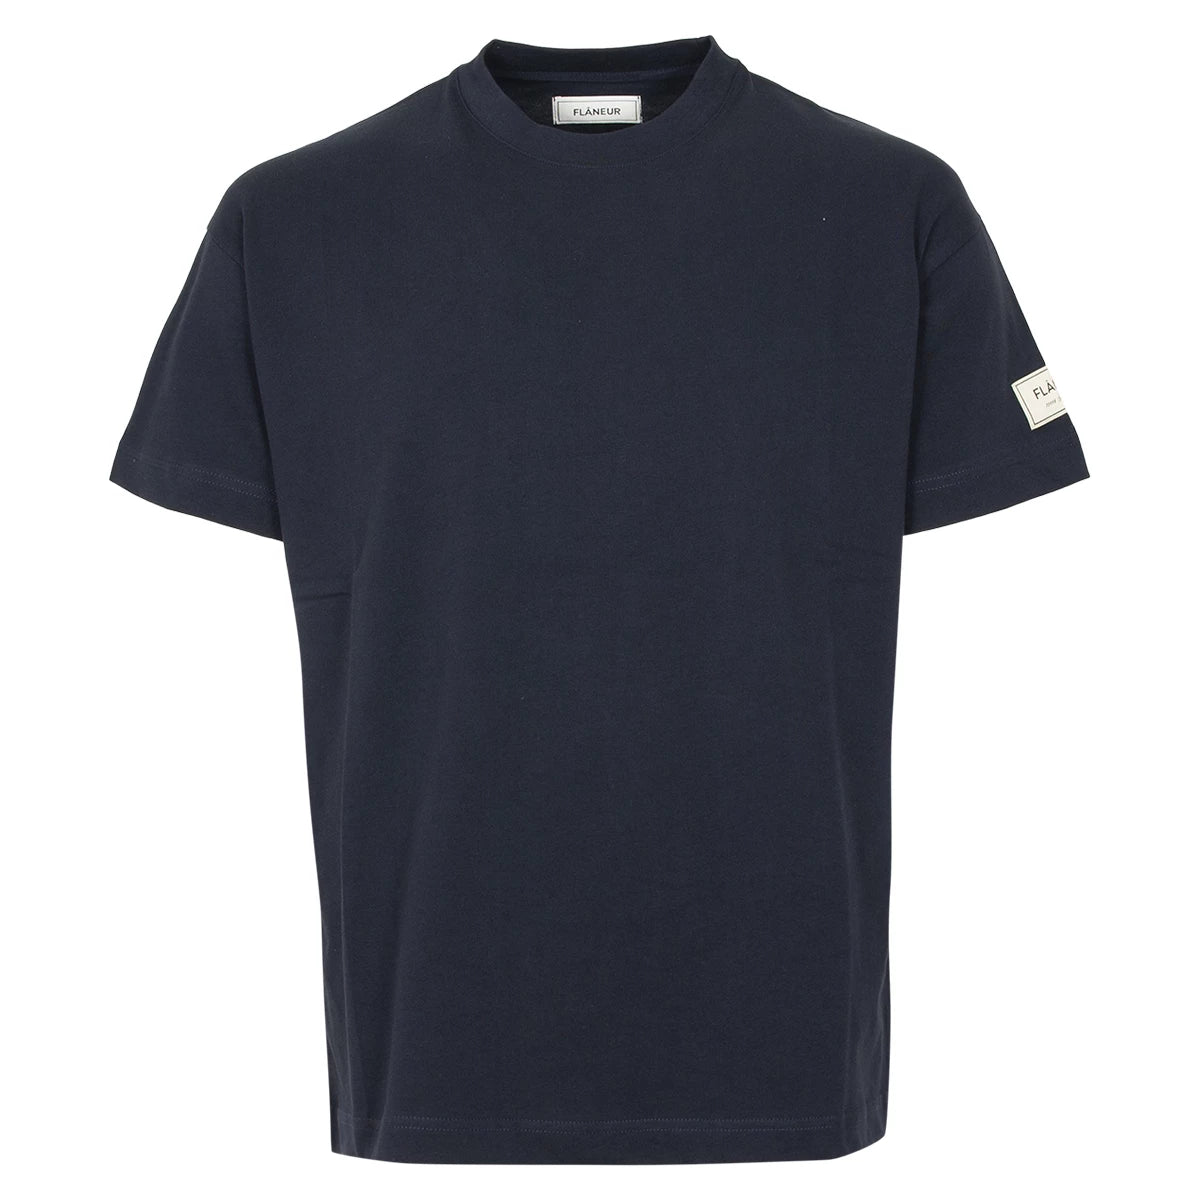 Flaneur T-shirt donkerblauw | Atelier shirt